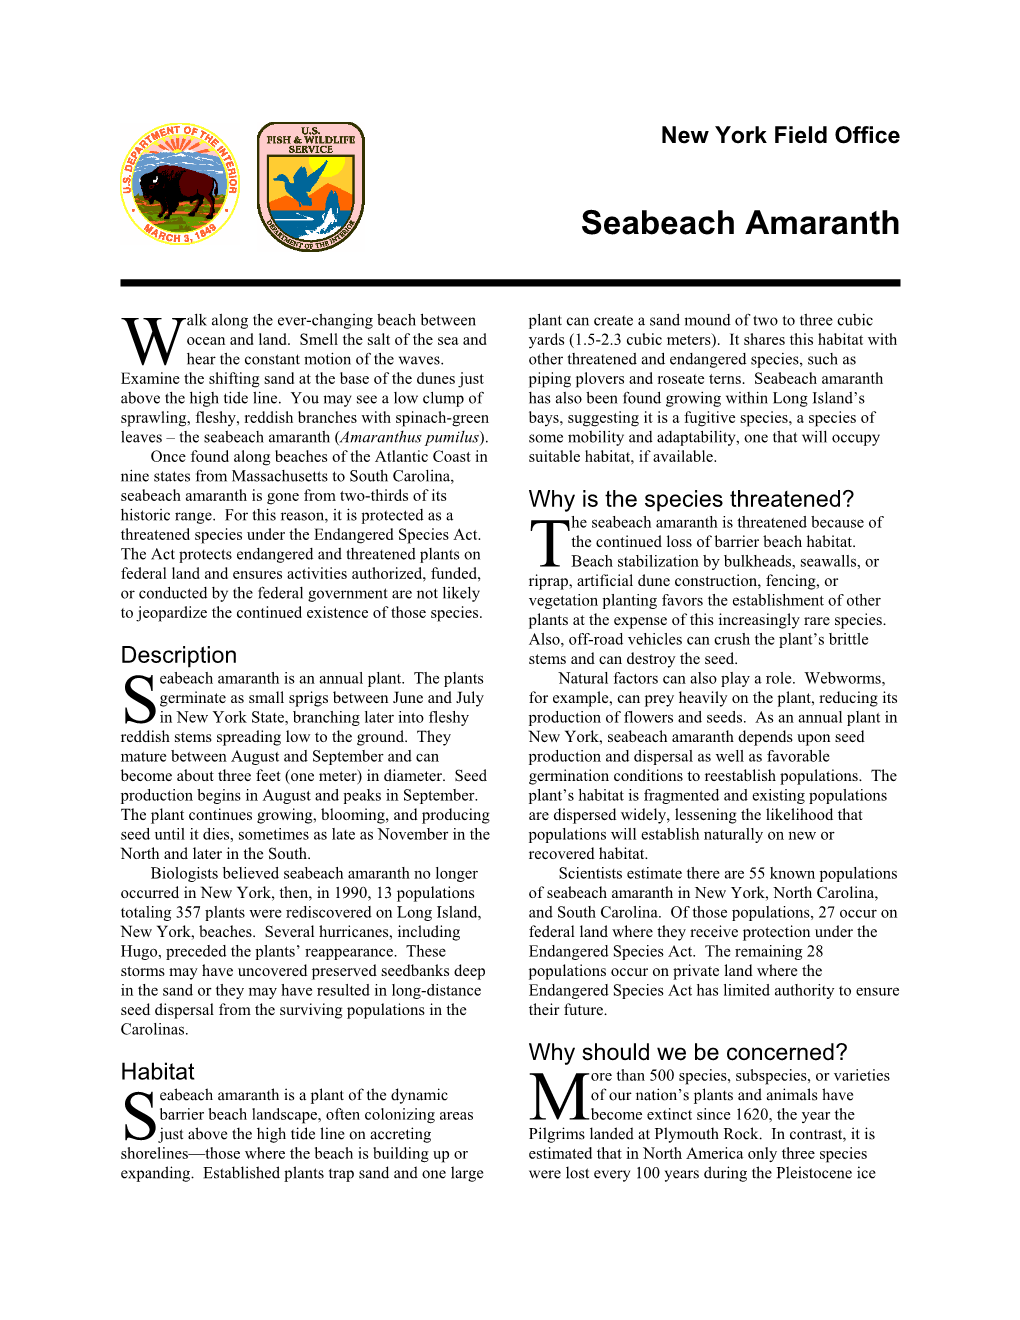 Seabeach Amaranth